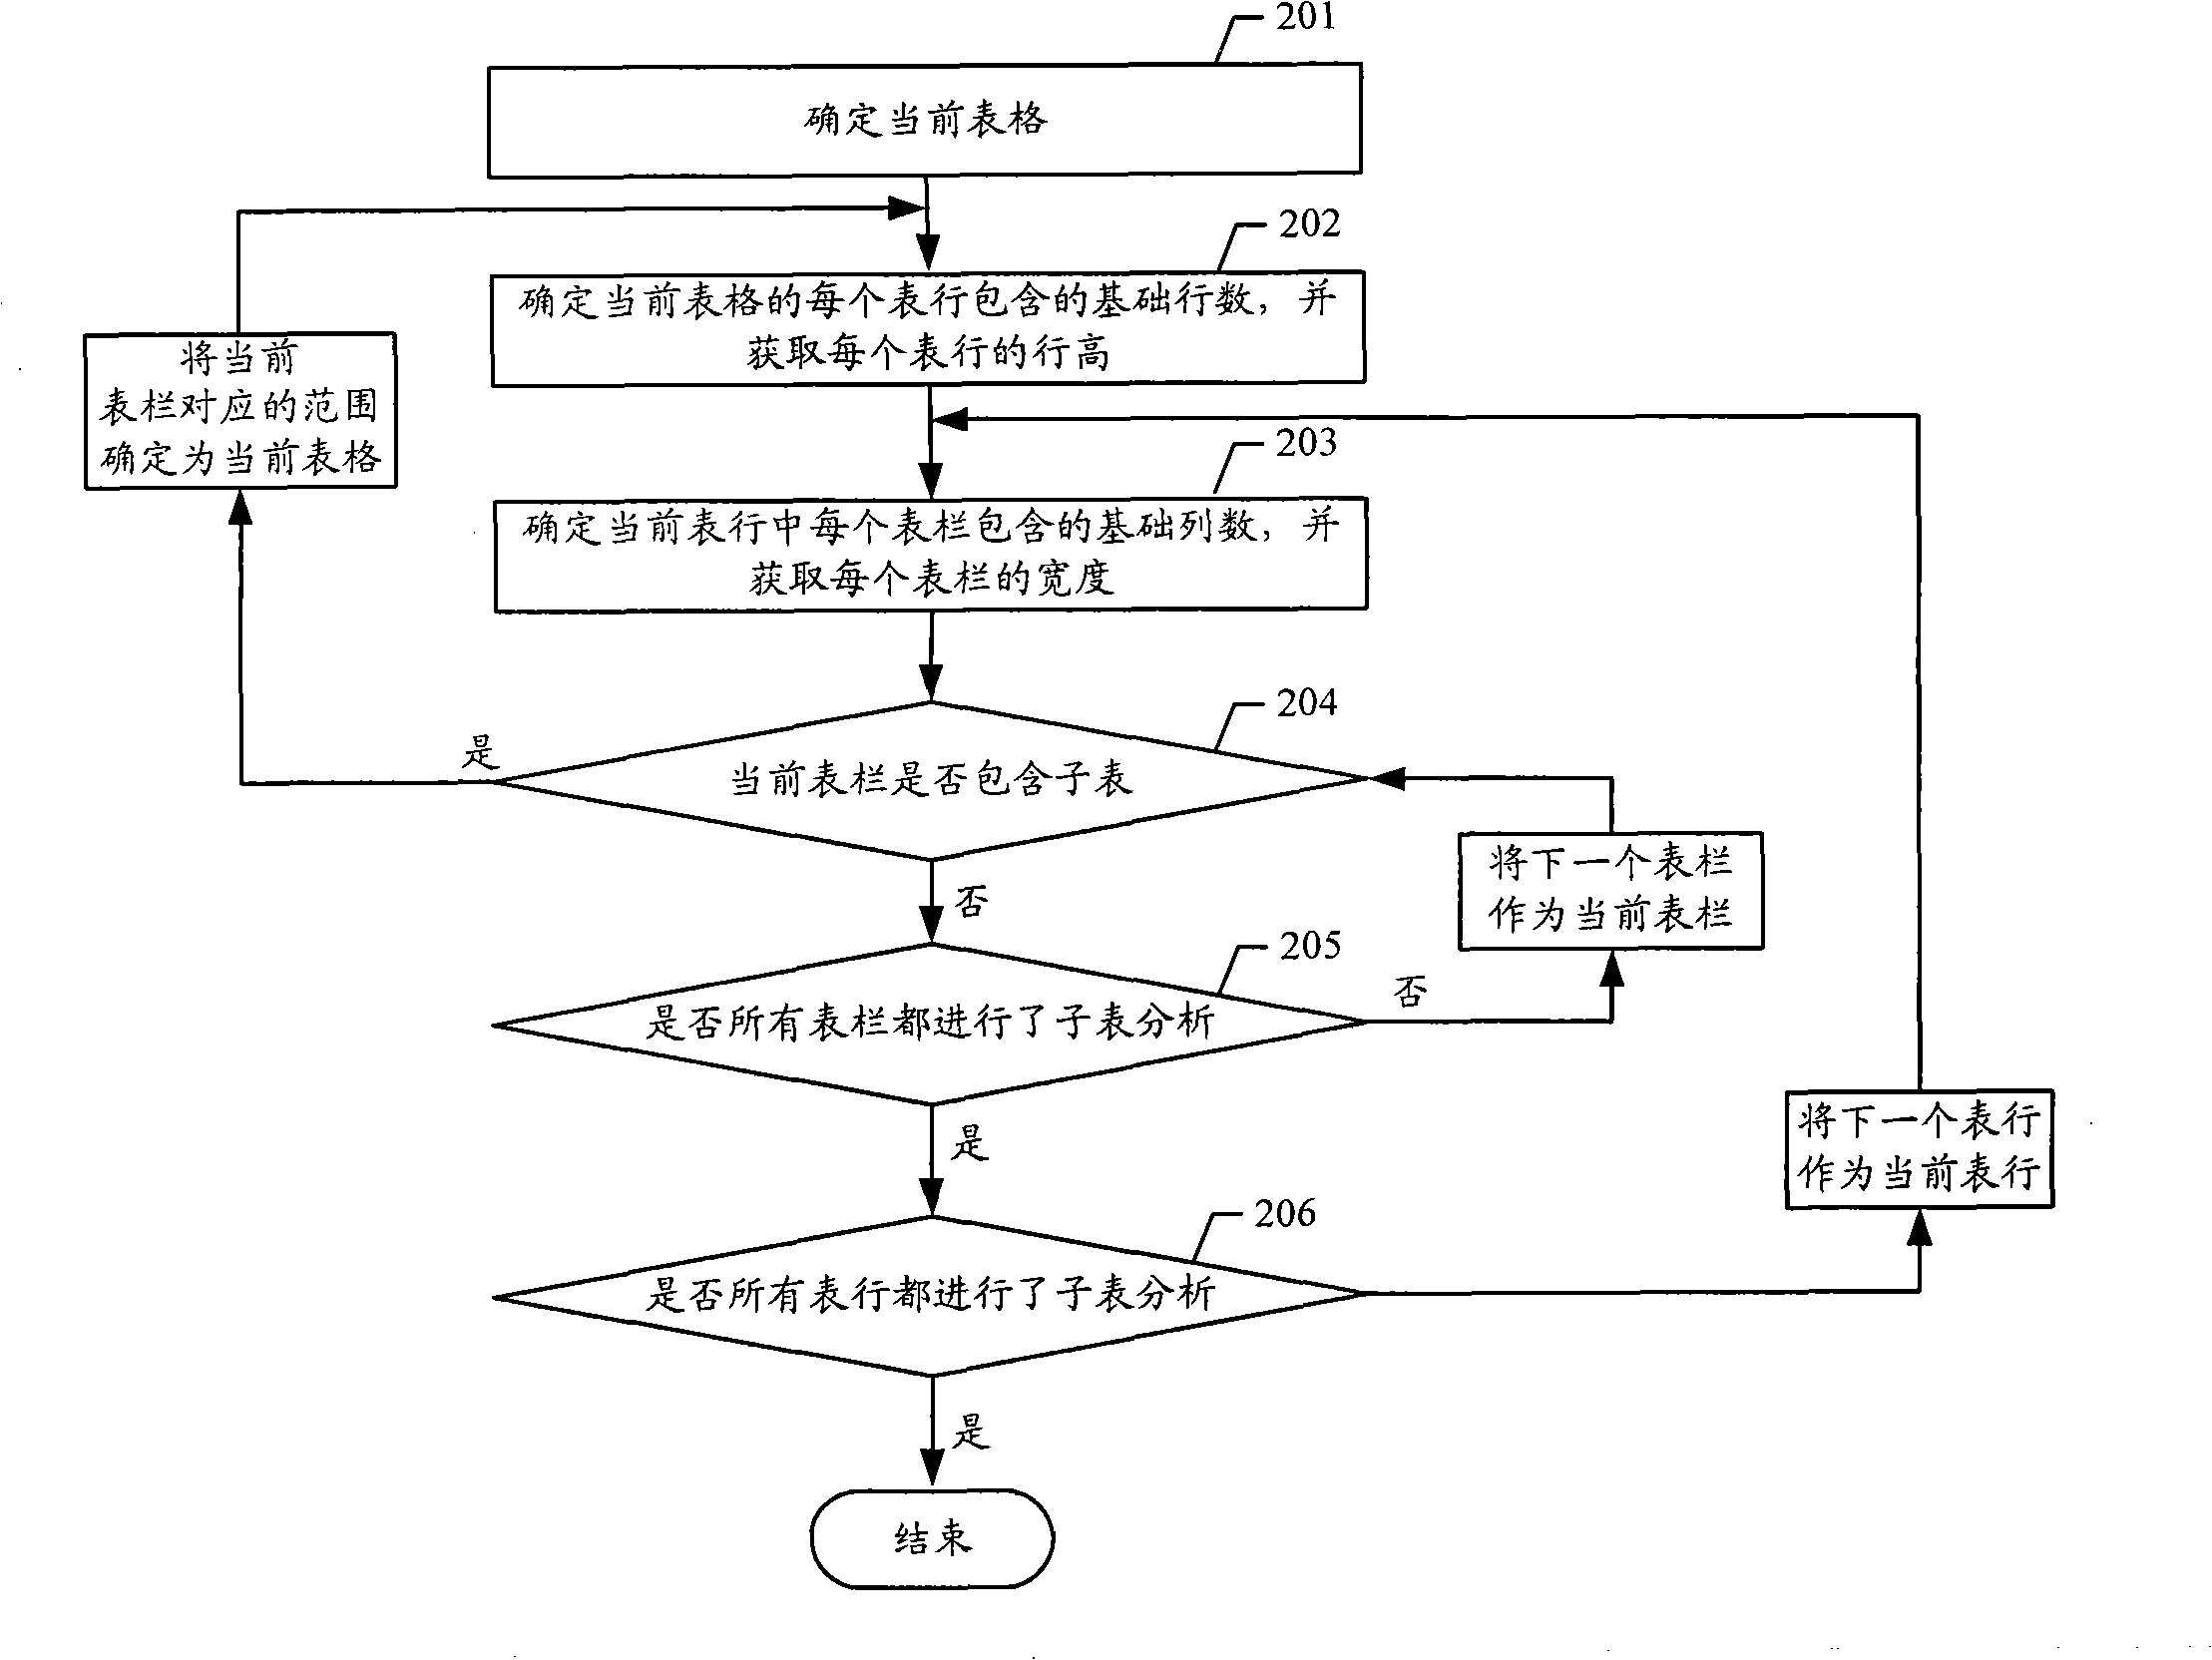 Method and apparatus for converting form describing mode